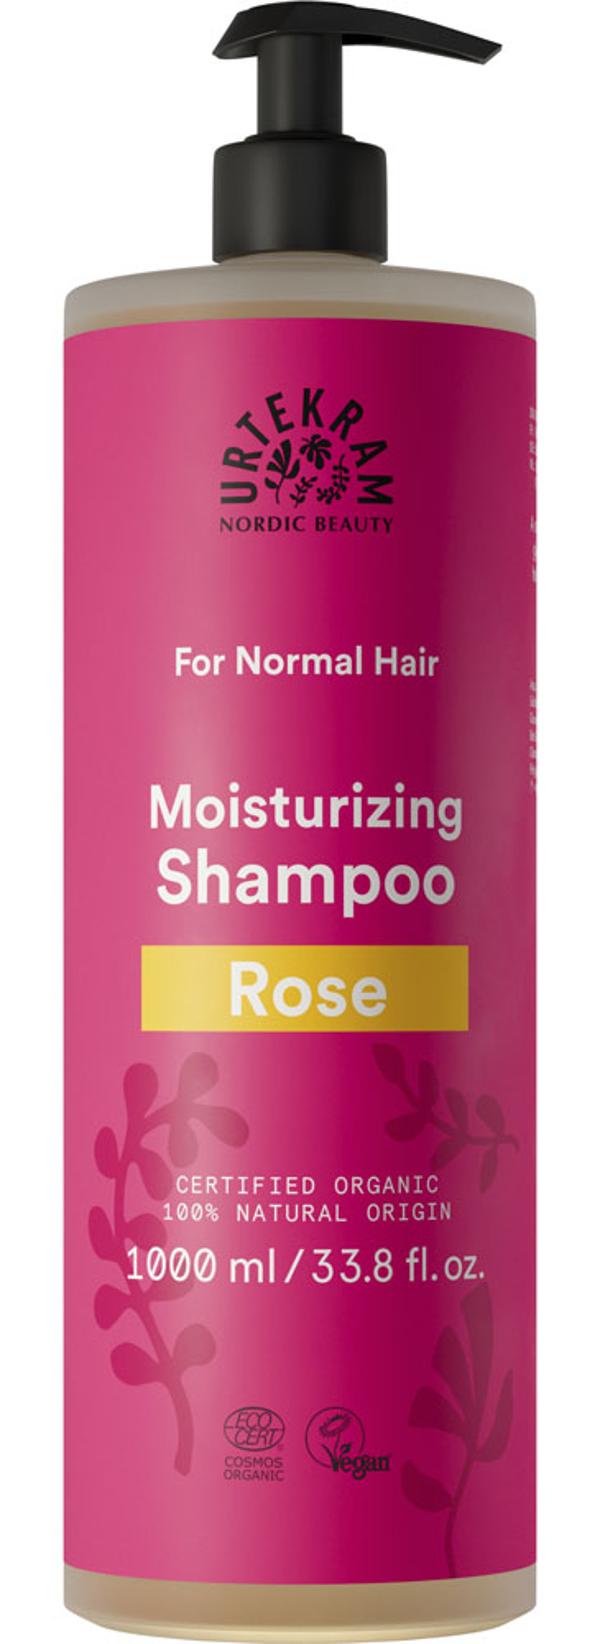 Produktfoto zu Urtekram Rose Shampoo 1l normales Haar